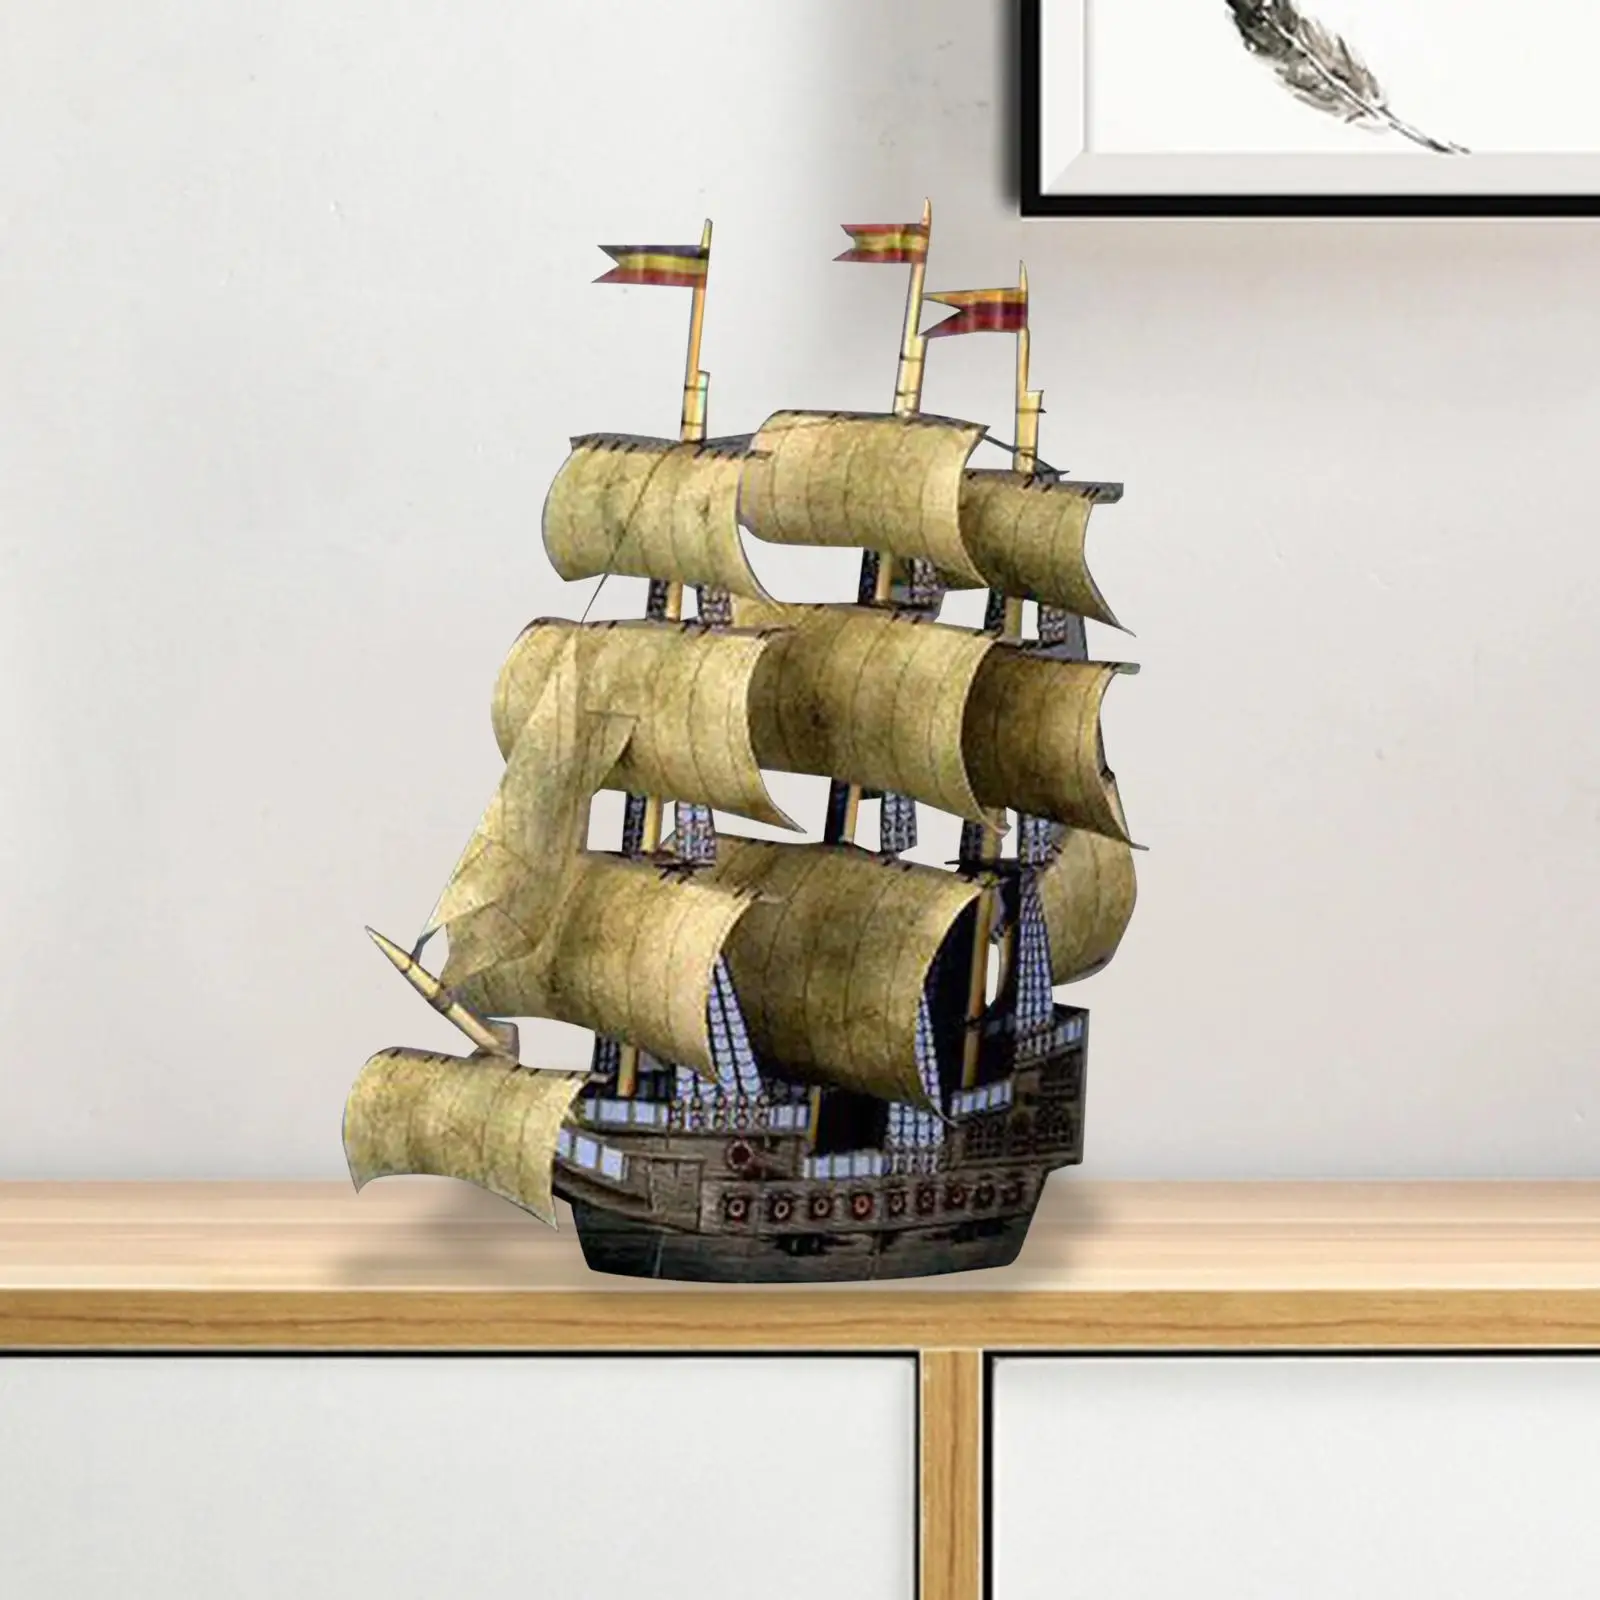 Pirate Ship Arts Crafts Papercraft Ship Model Boat Kits for Kids Home Boys